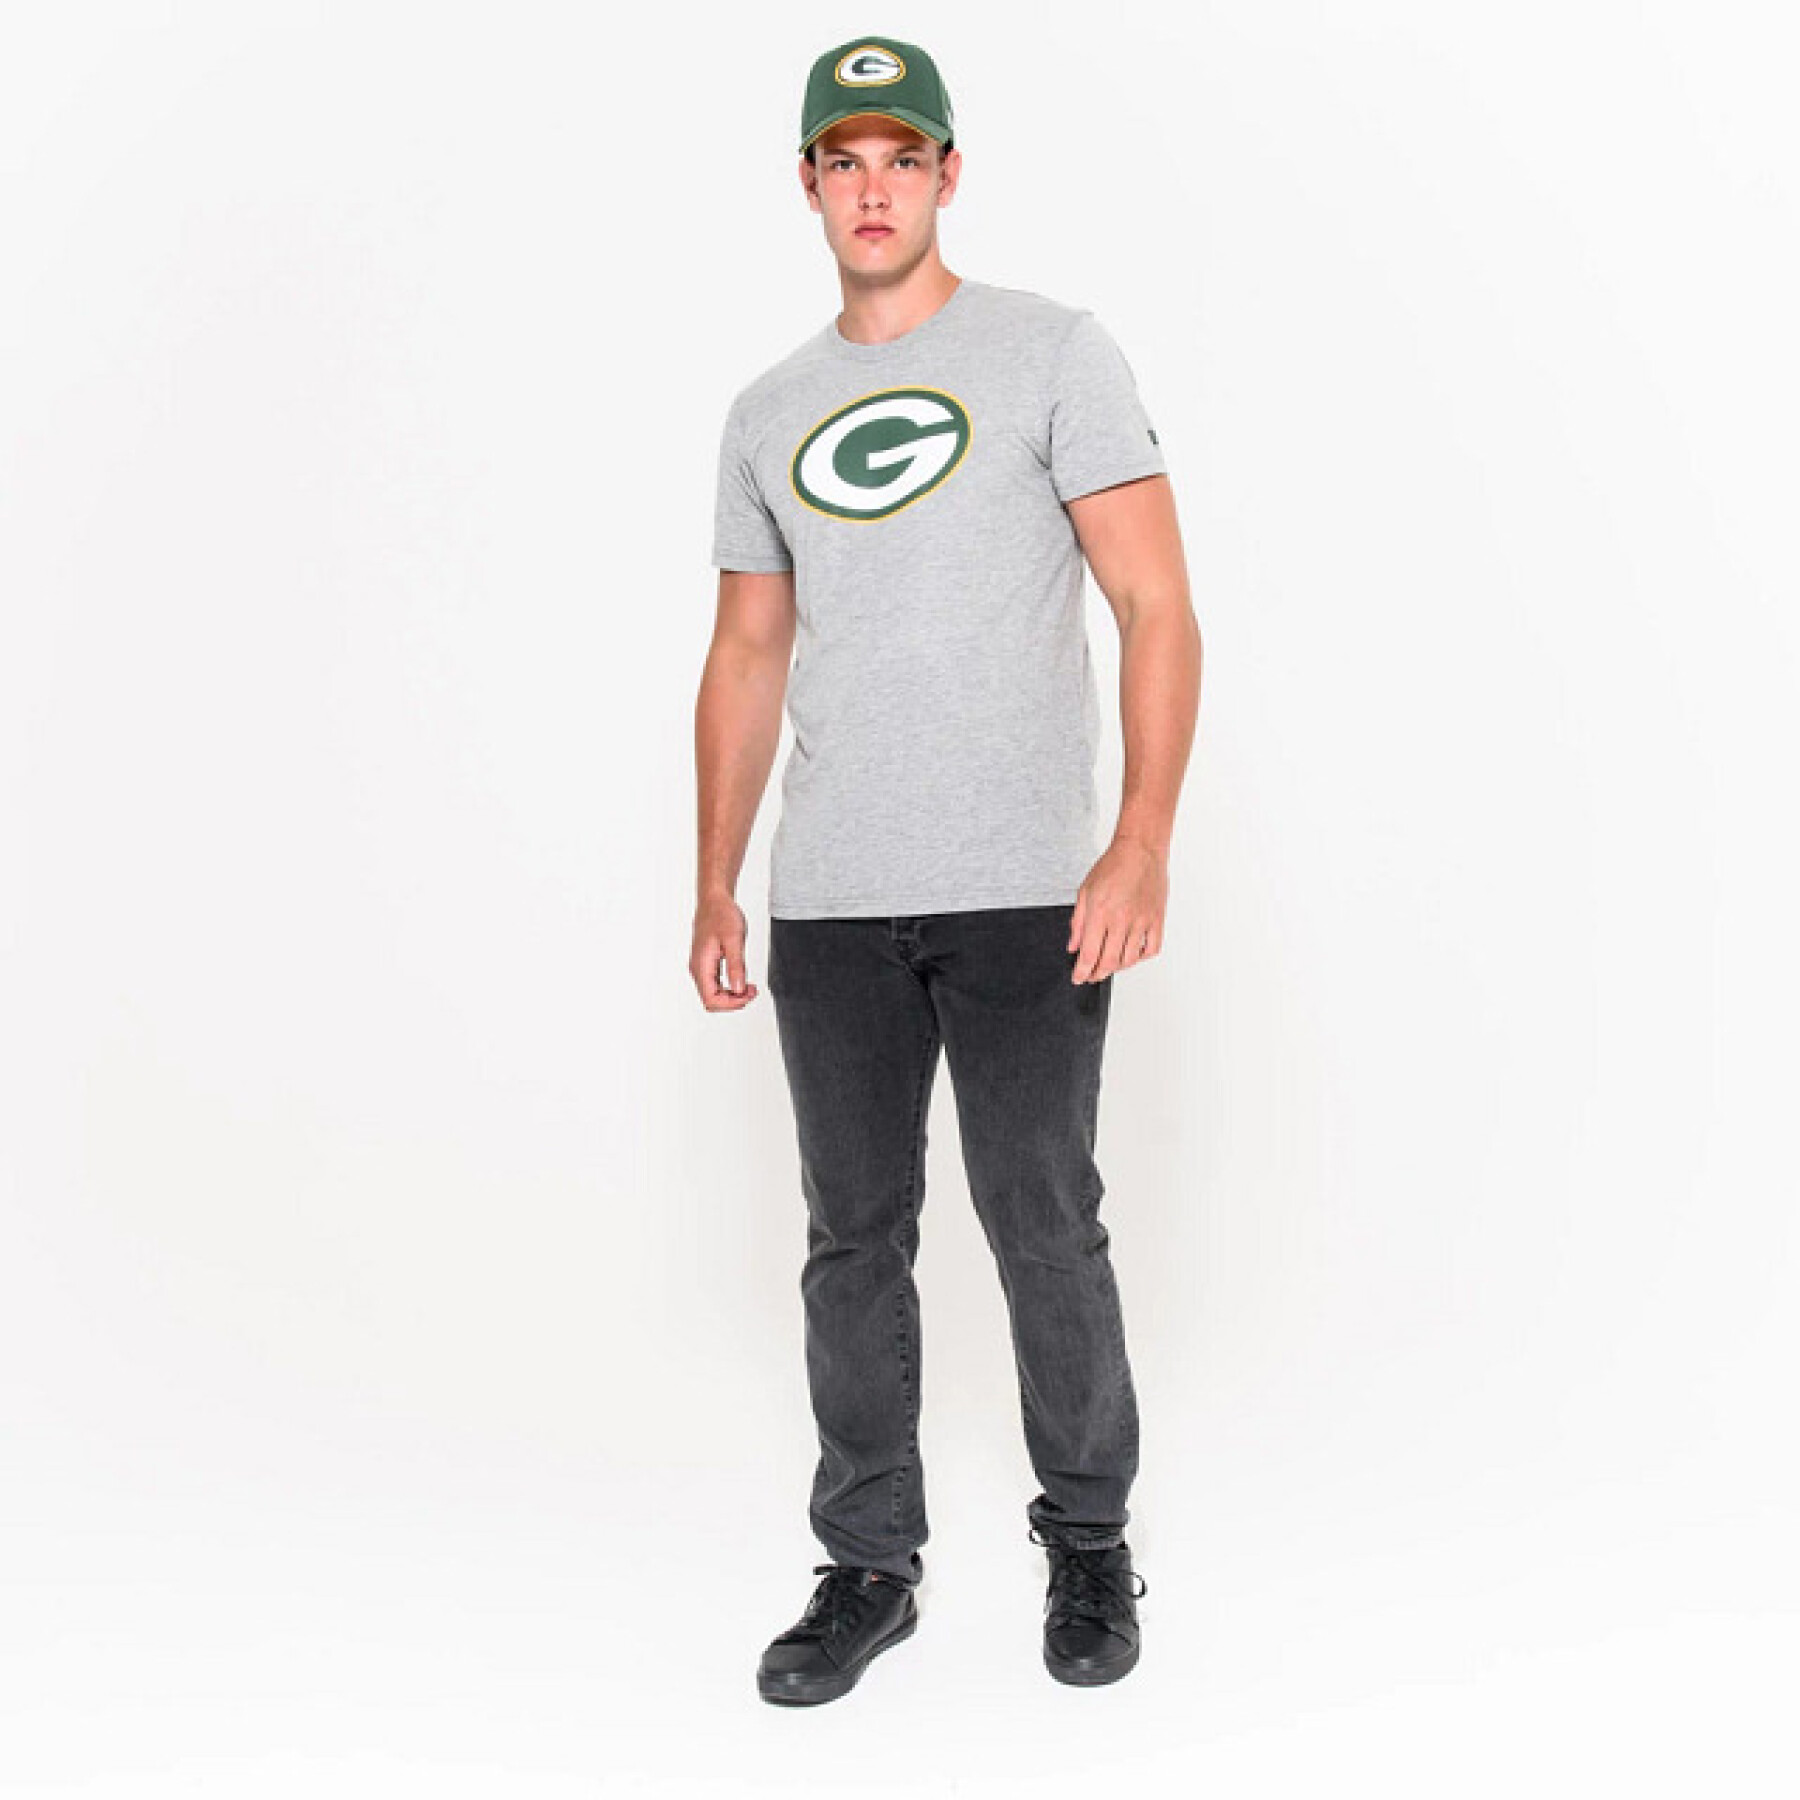 Camiseta Green Bay Packers NFL